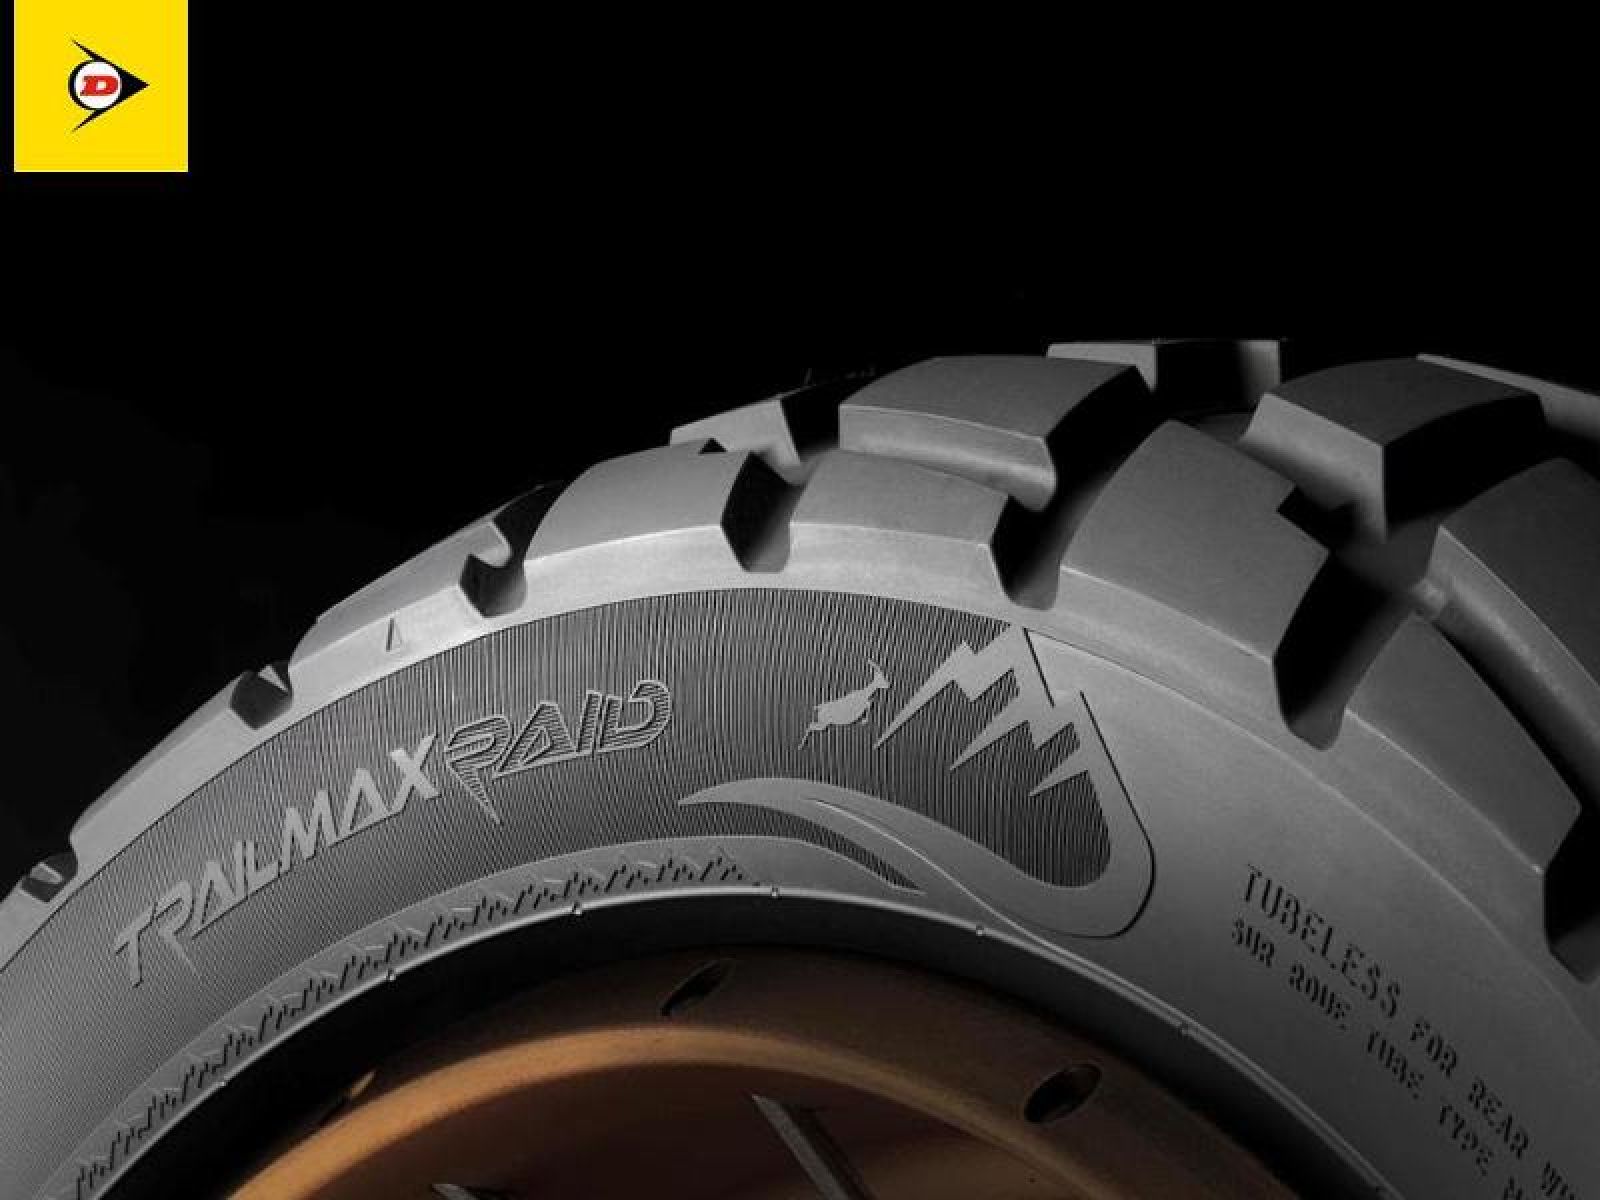 Dunlop proširuje ponudu novom Trailmax Raid gumom